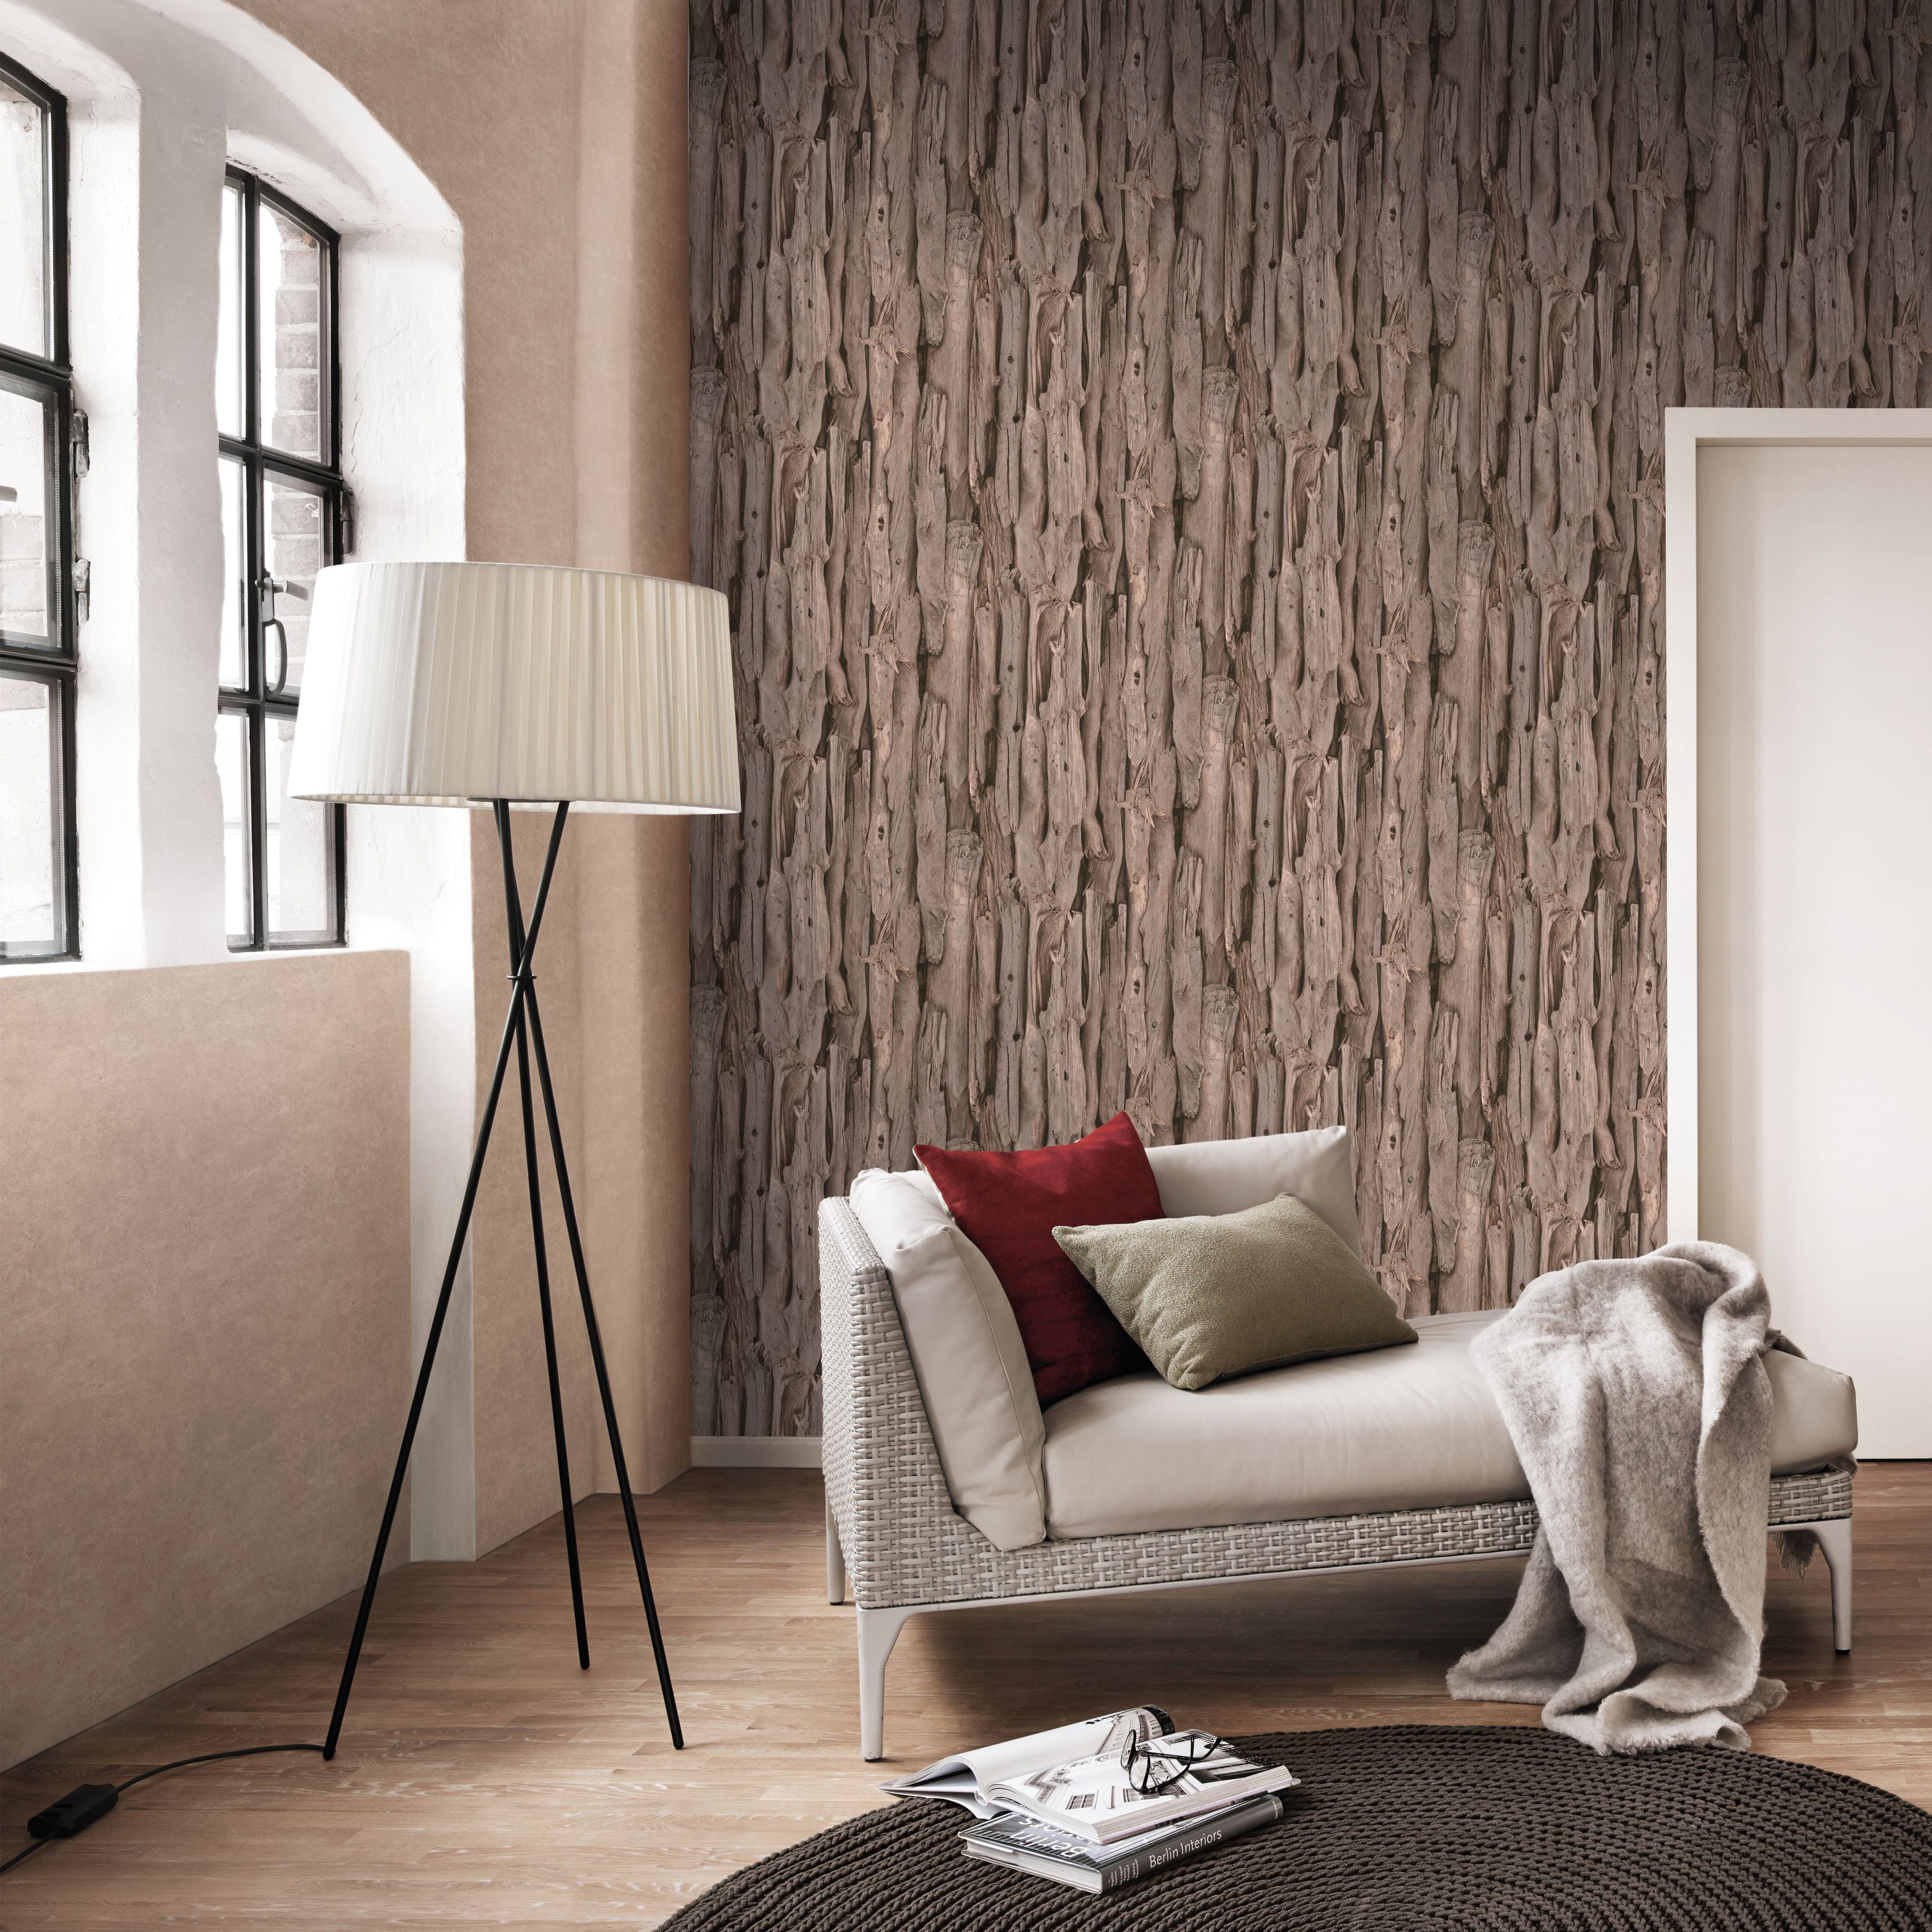 living room wallpaper b&q,furniture,room,interior design,living room,wall